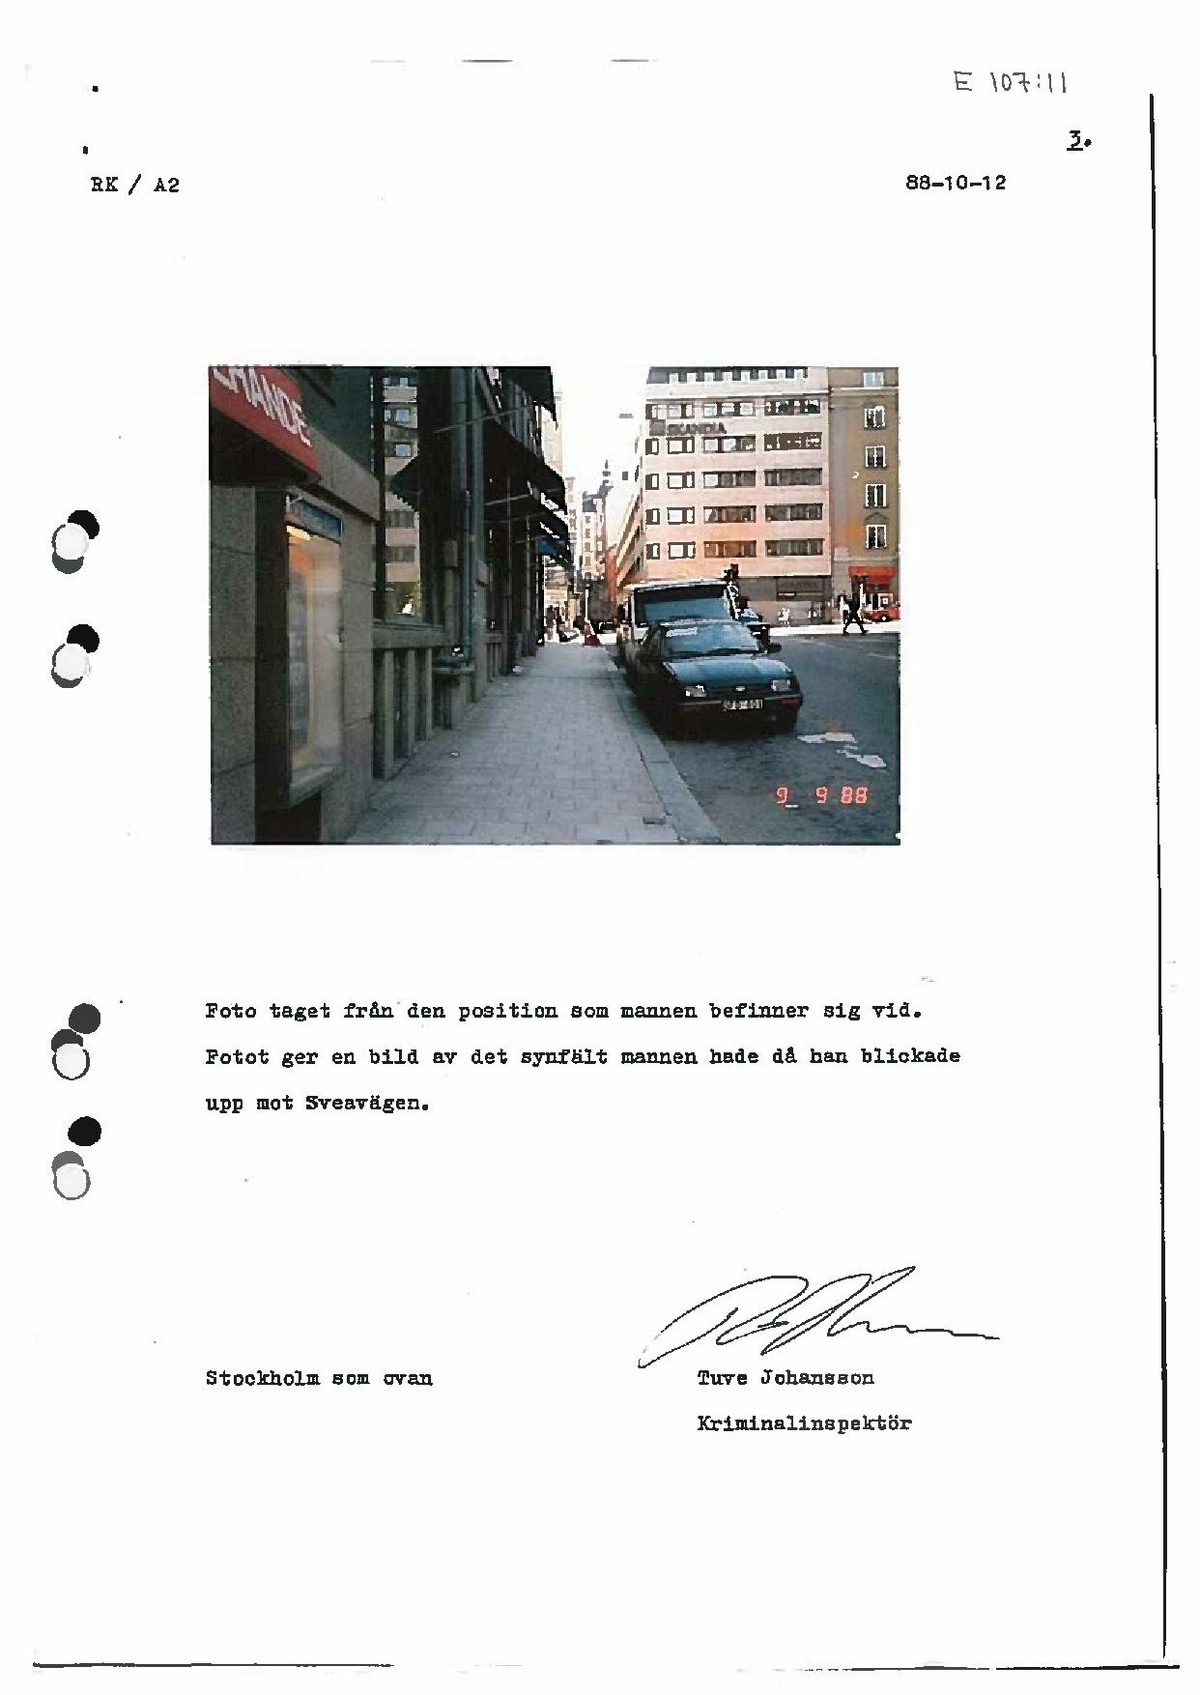 Pol-1988-10-12 EBC10006-01-A Fotorekonstruktion av ärende E107-11 (= EBC10006-01).pdf